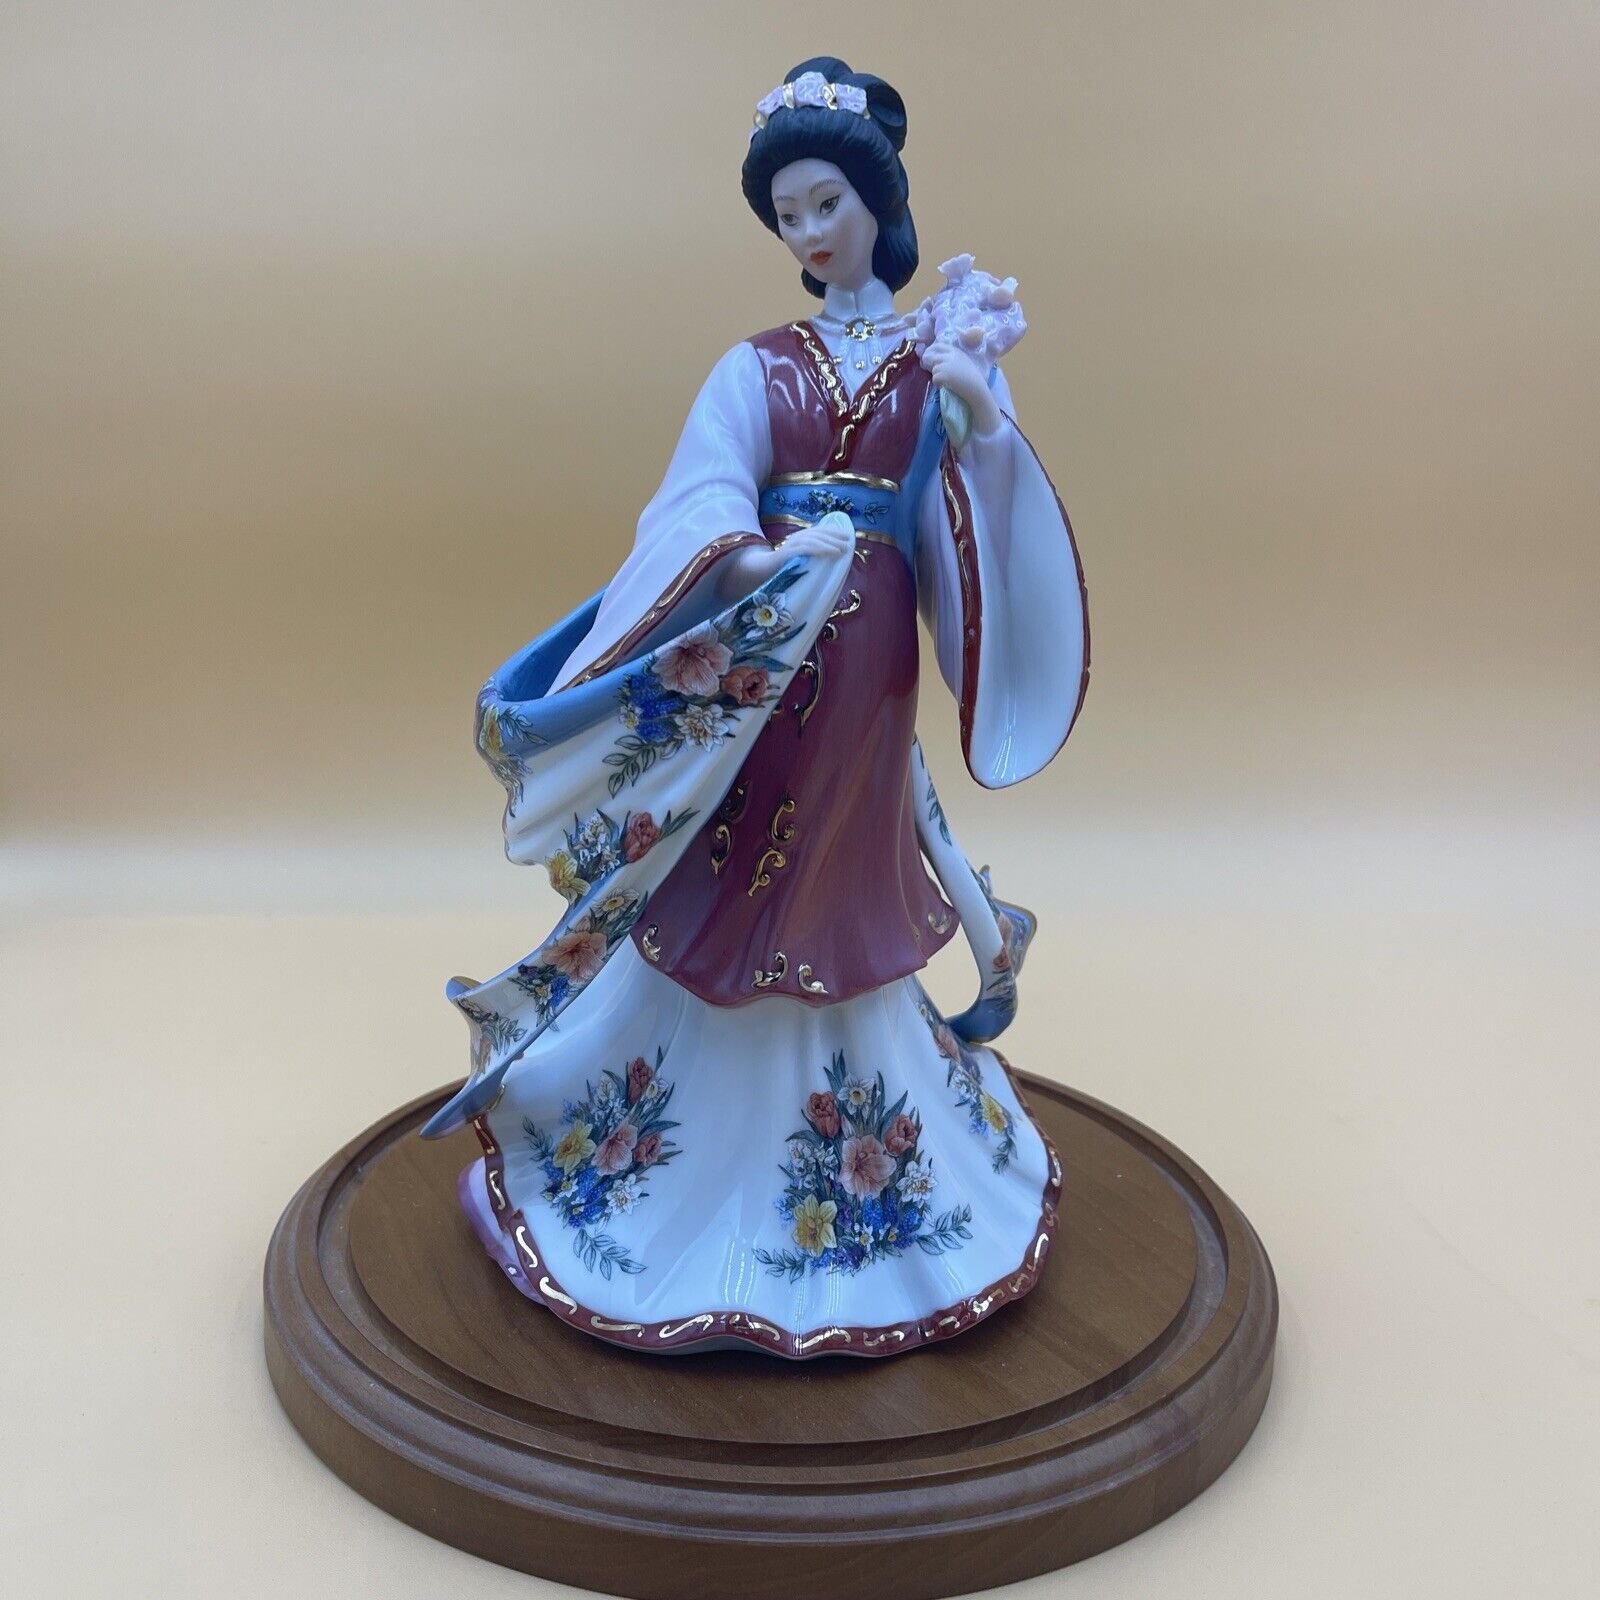 Lena Liu Glazed Statute Figurine Plum Blossom Princess Japanese Geish Glass Dome